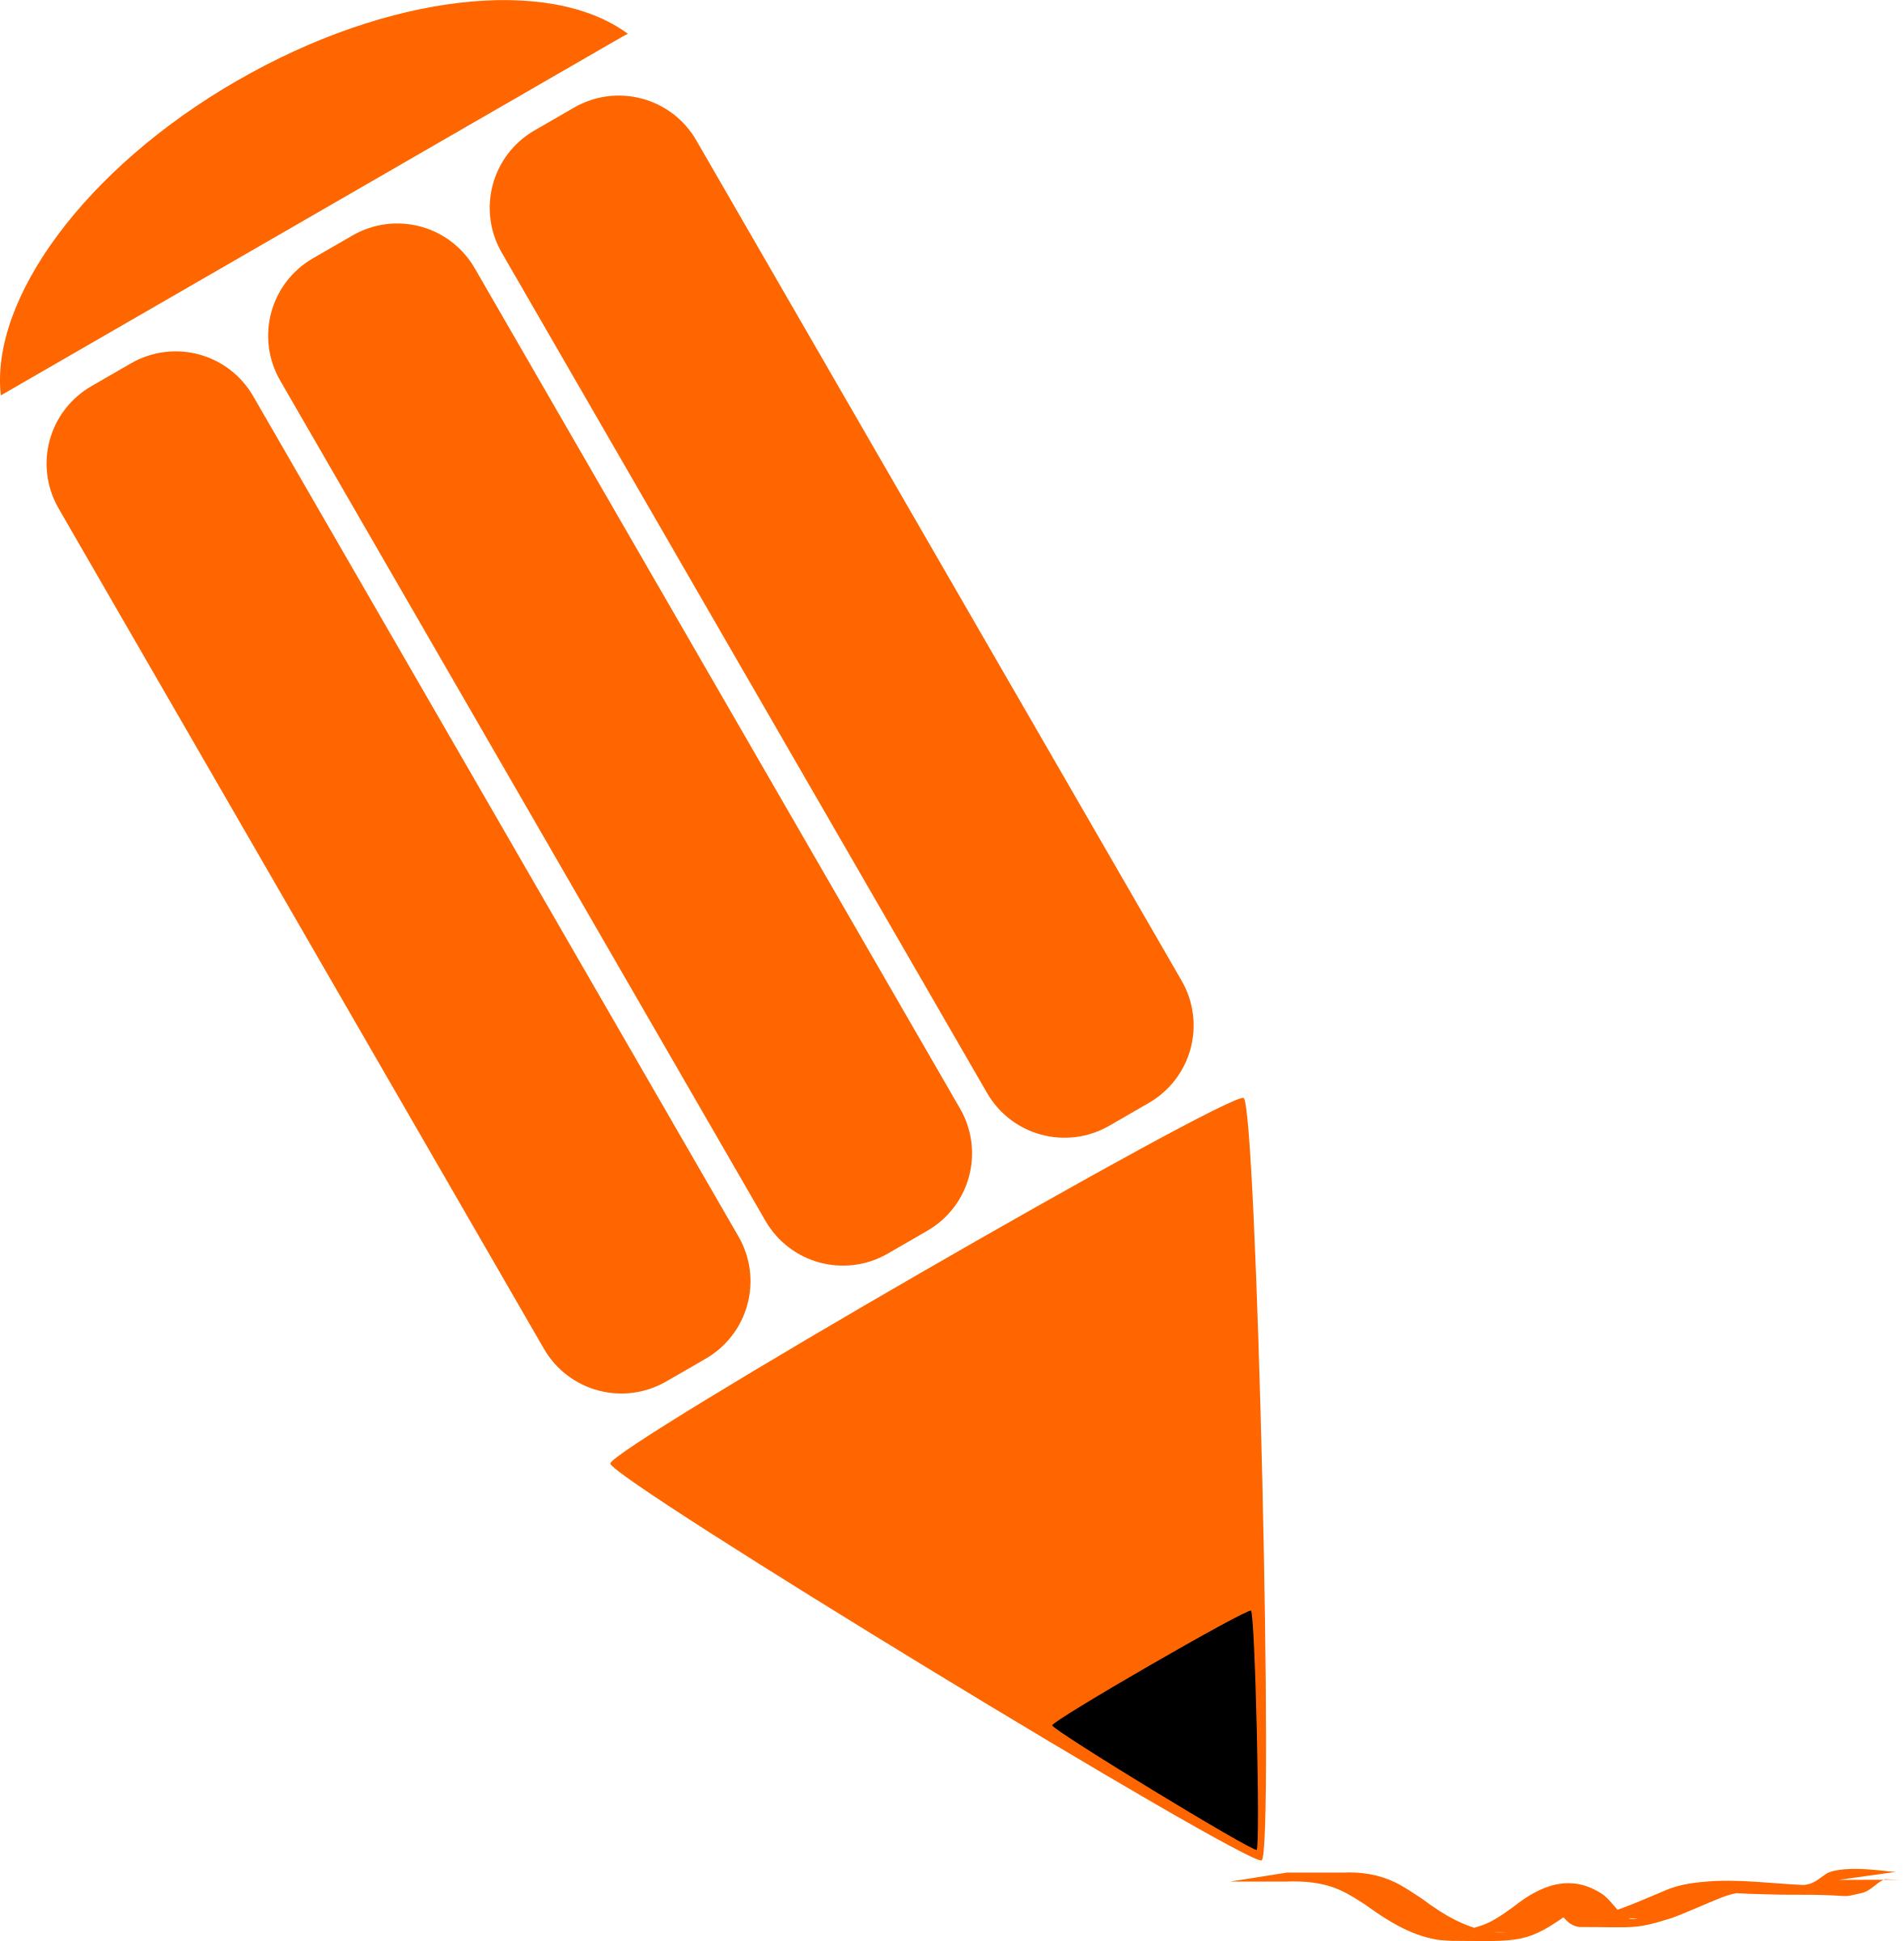 Pencil stylized Orange PNG icons